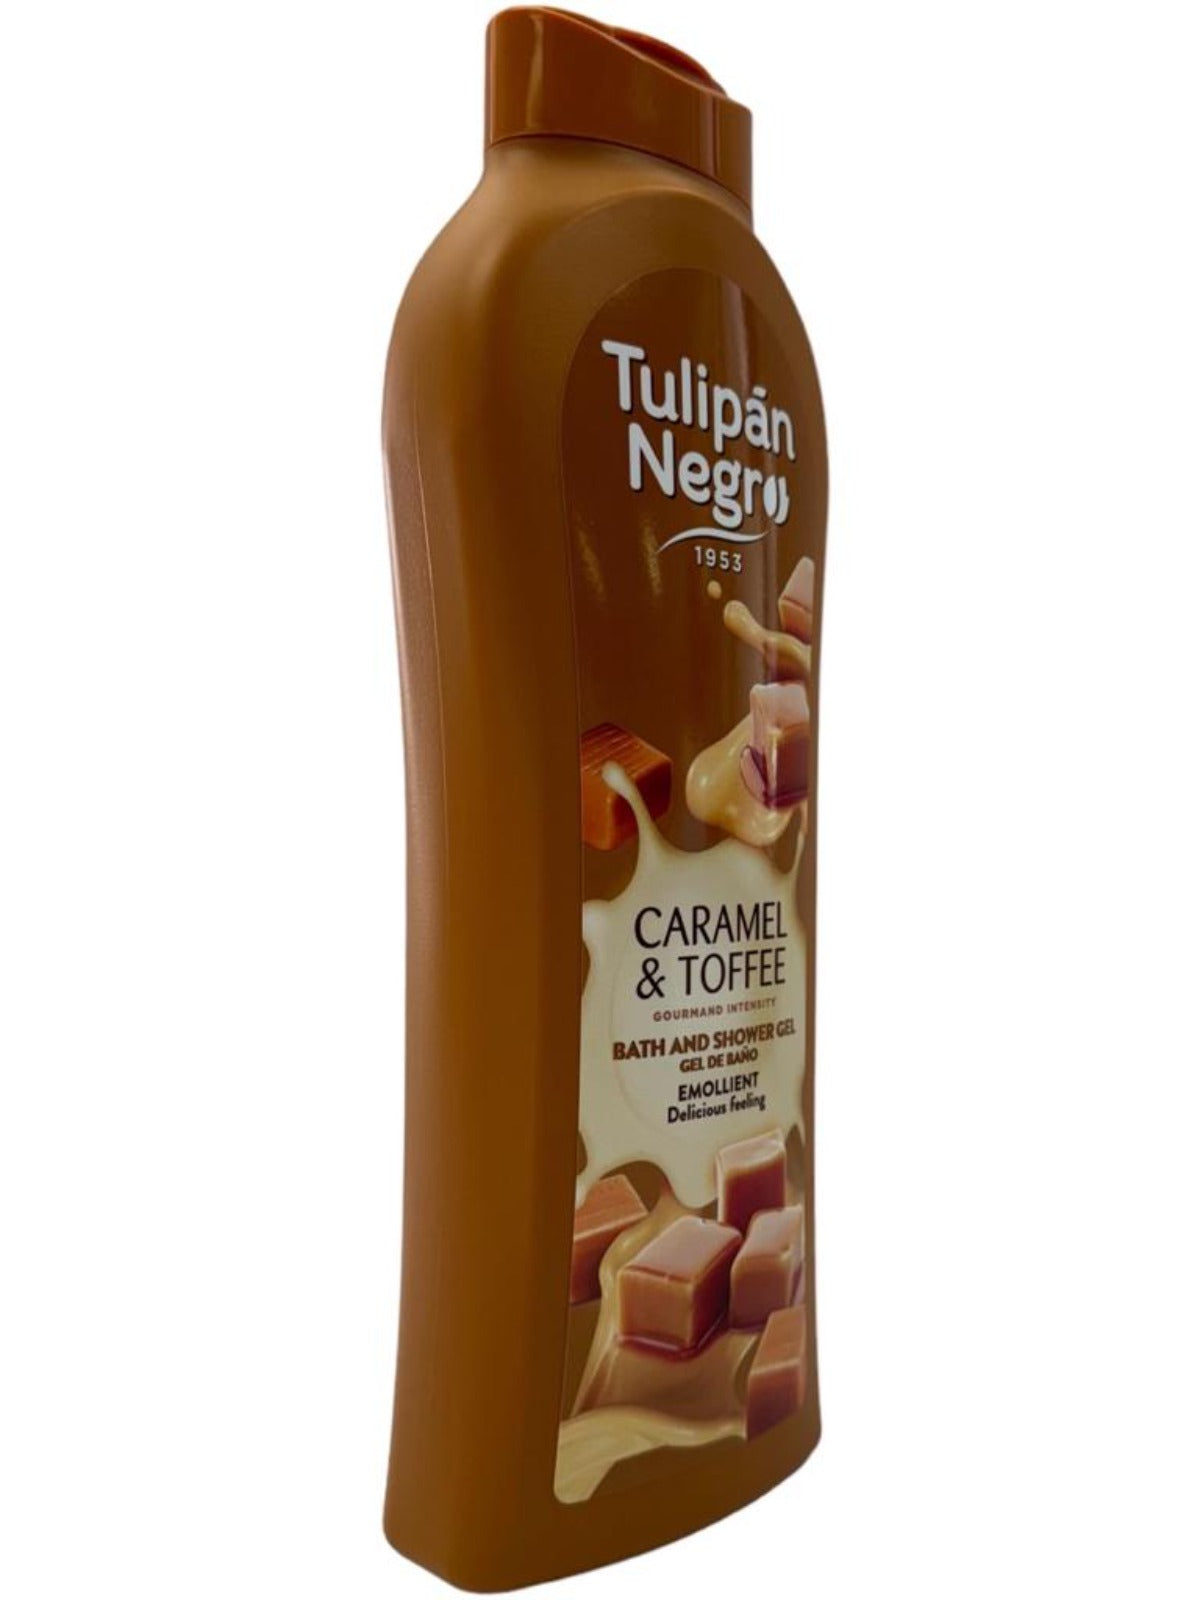 Tulipan Negro Caramel & Toffee Spanish Bath And Shower Gel 650ml